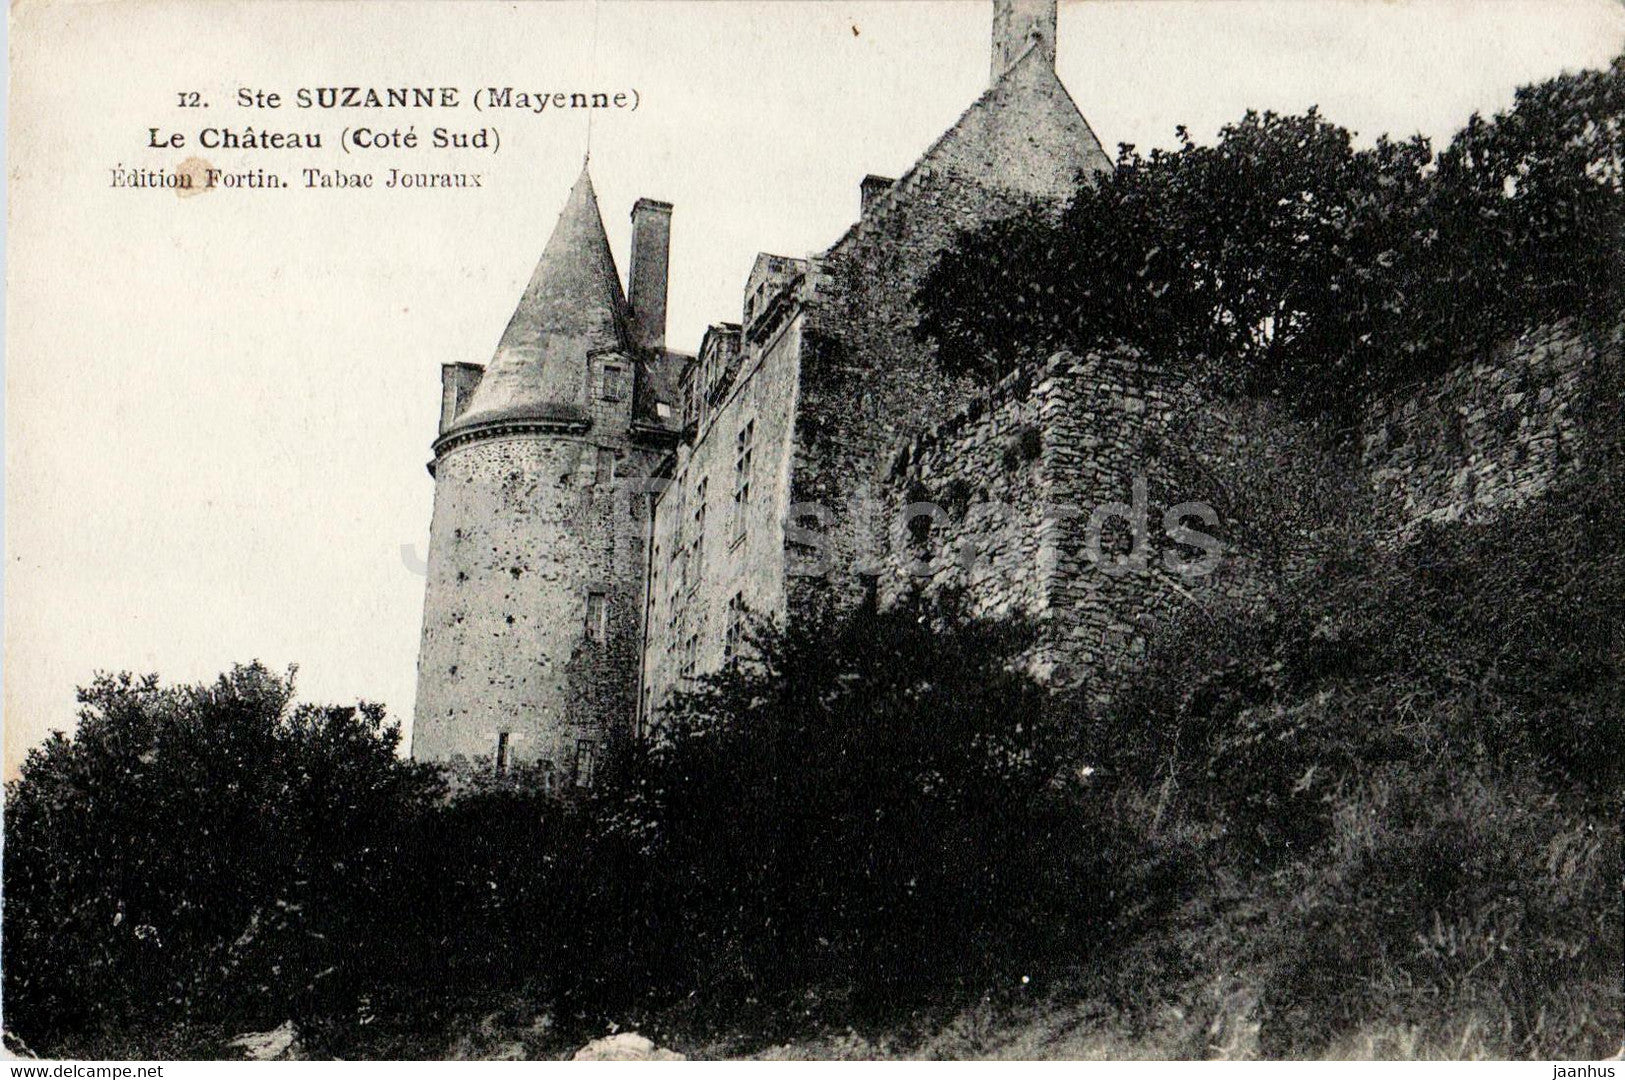 Ste Suzanne - Le Chateau - Cote Sud - castle - 12 - old postcard - 1910 - France - used - JH Postcards